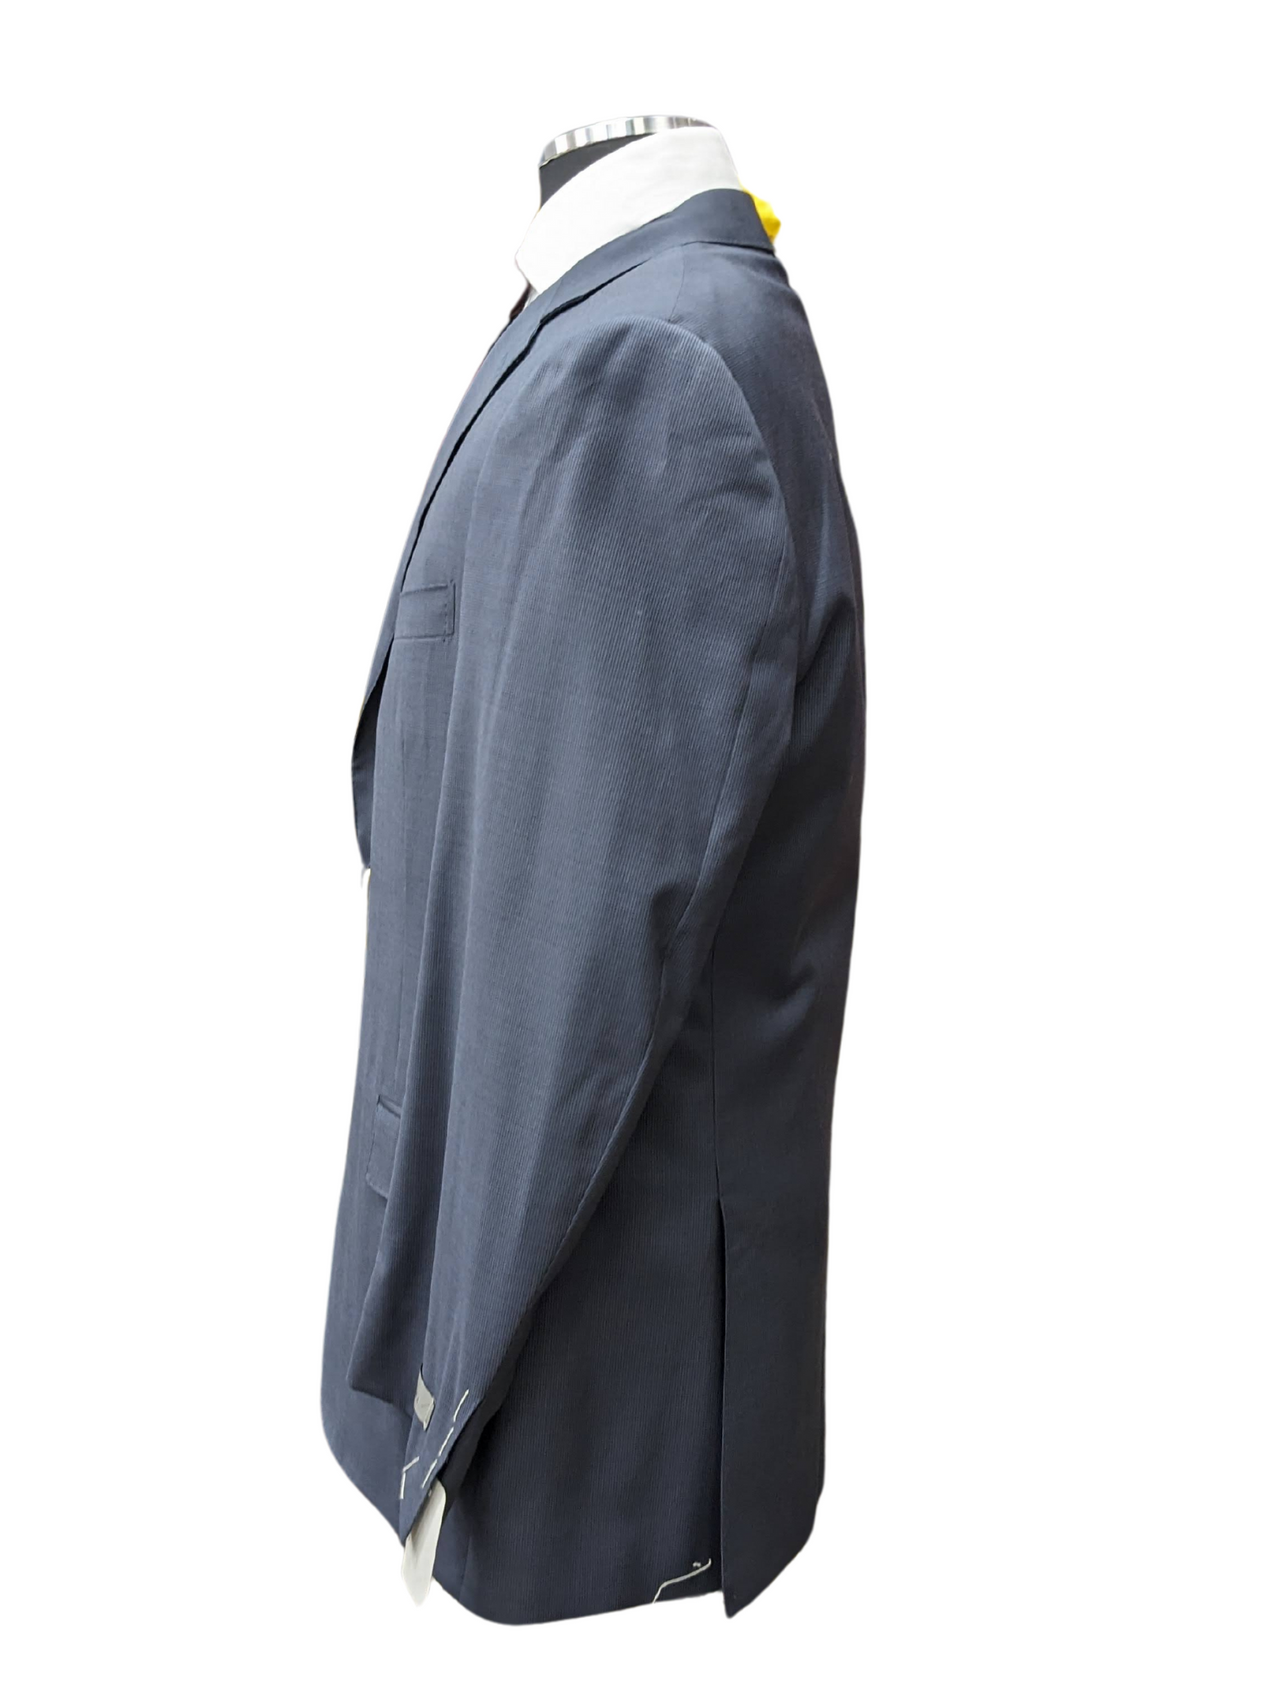 Canali 1934 Mens Blue Check 44R Drop 7 100% Wool 2 Button 2 Piece Suit